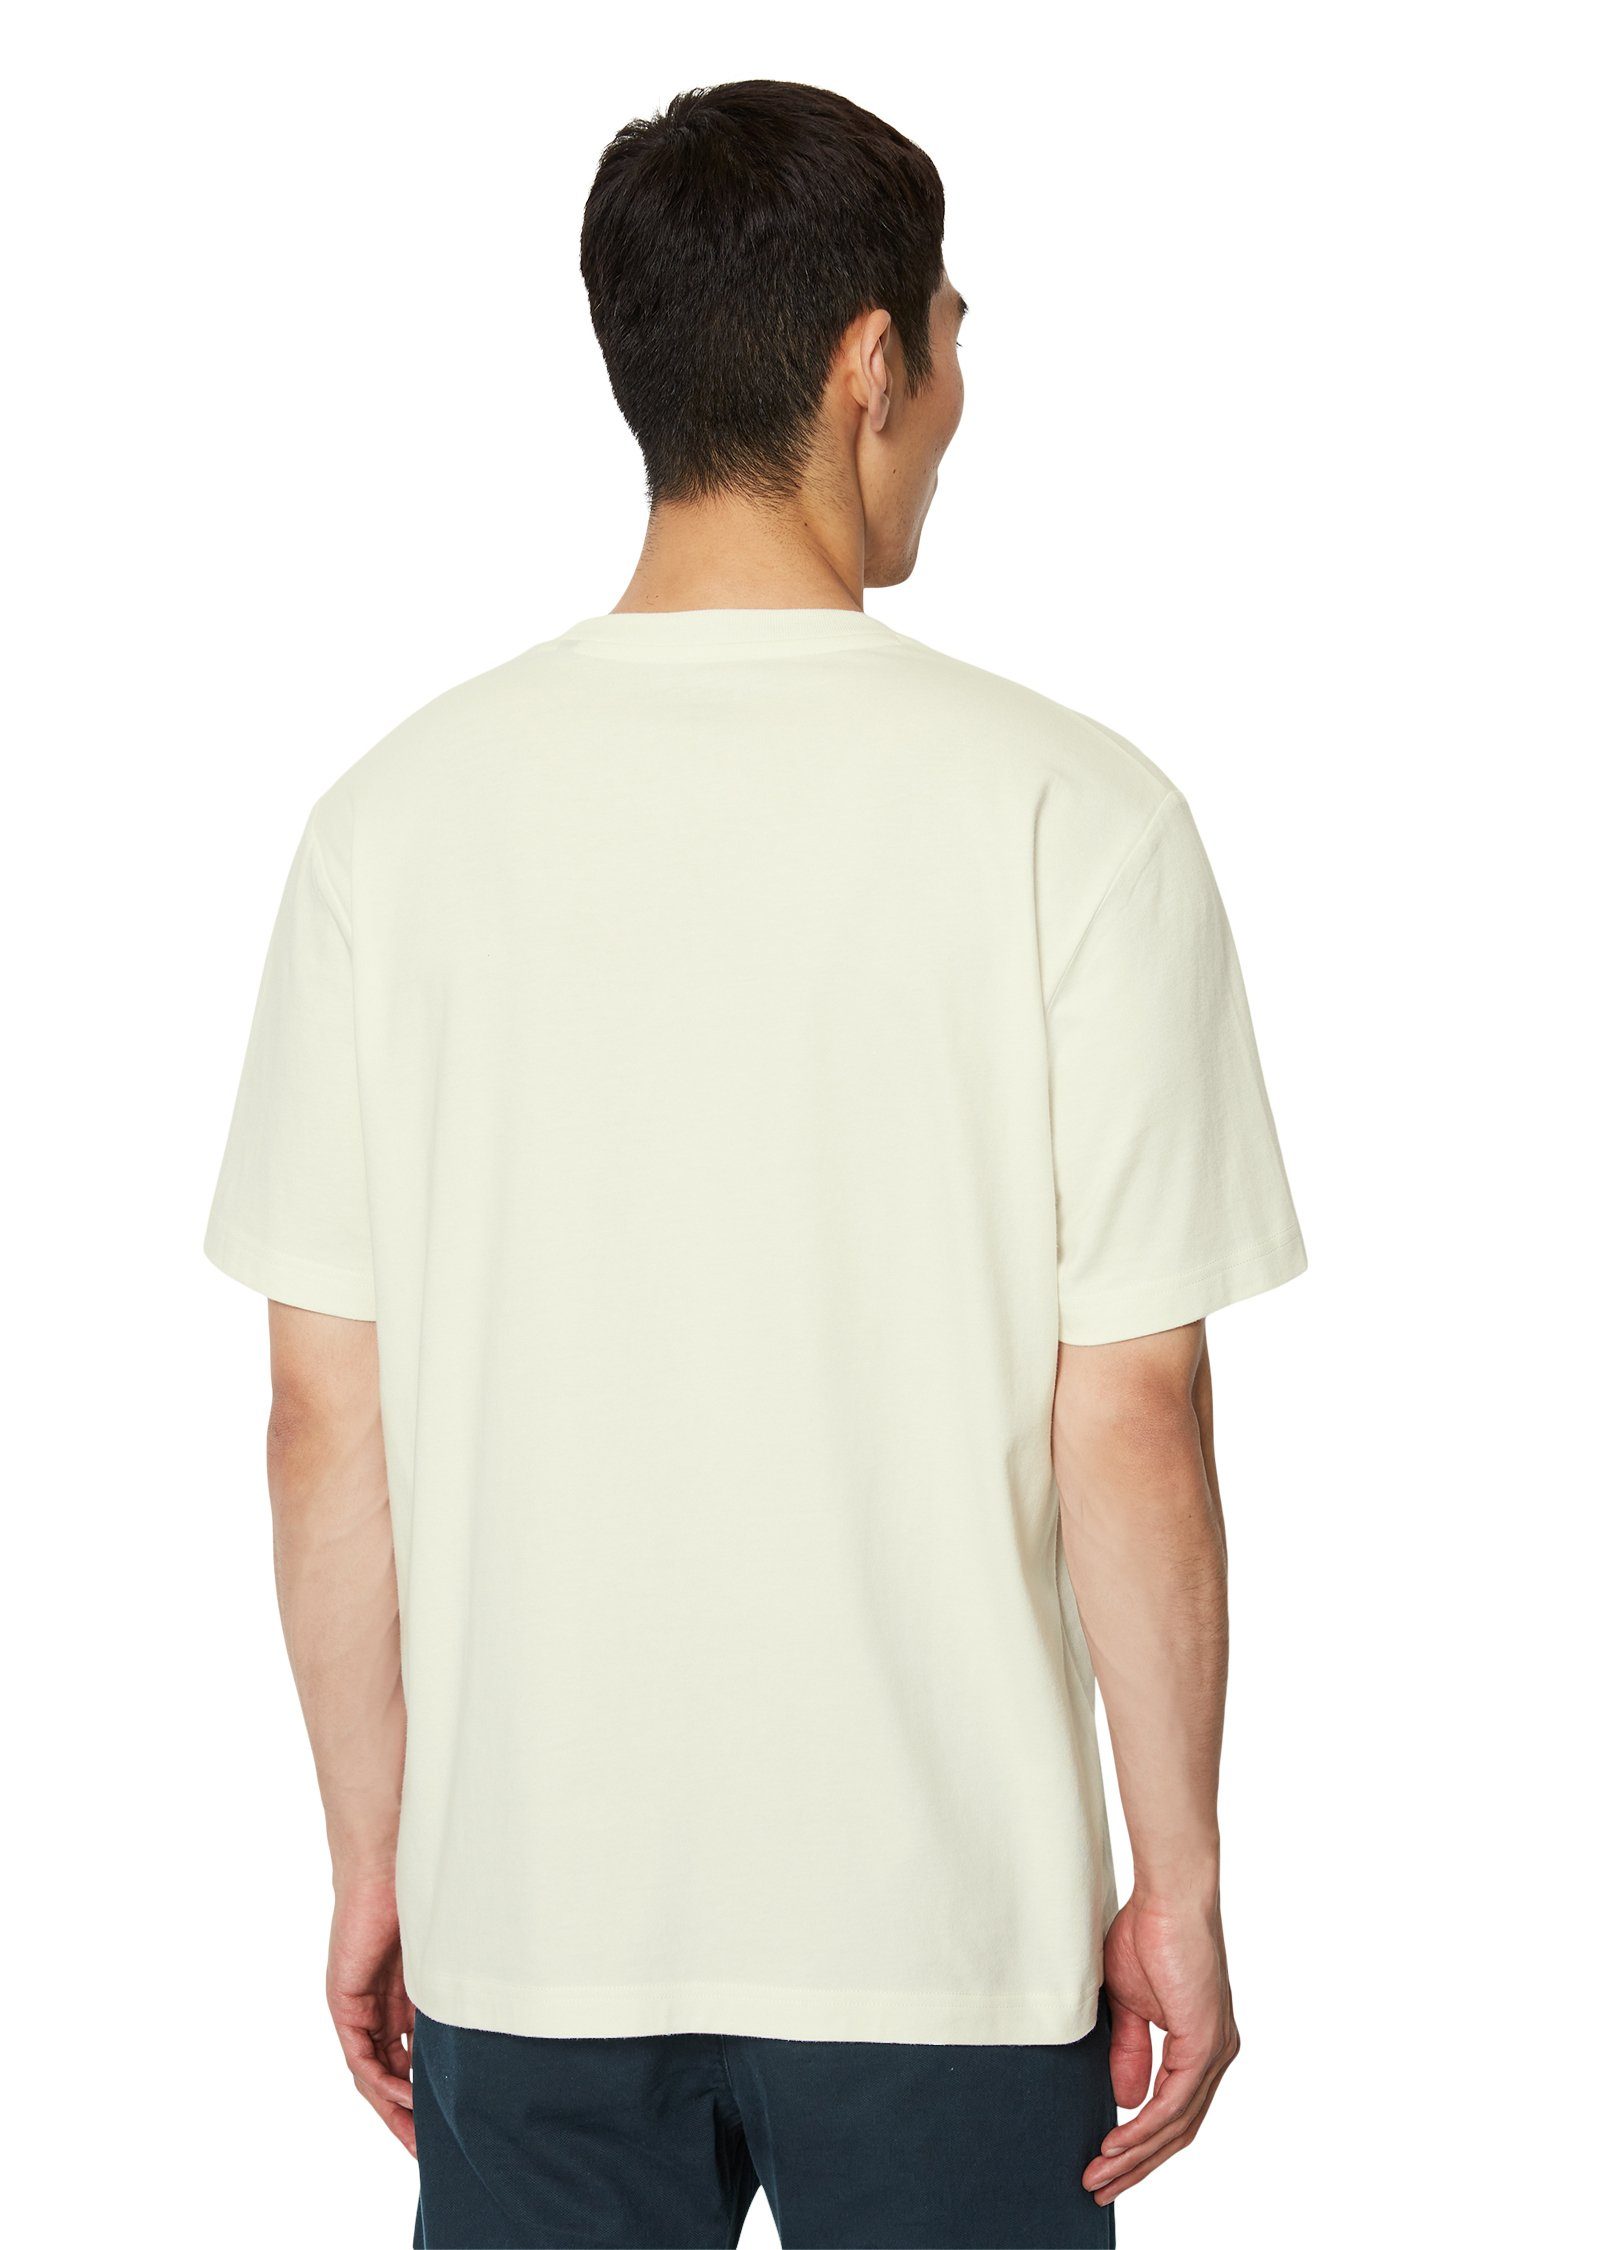 mulit/ O'Polo print T-Shirt Marc